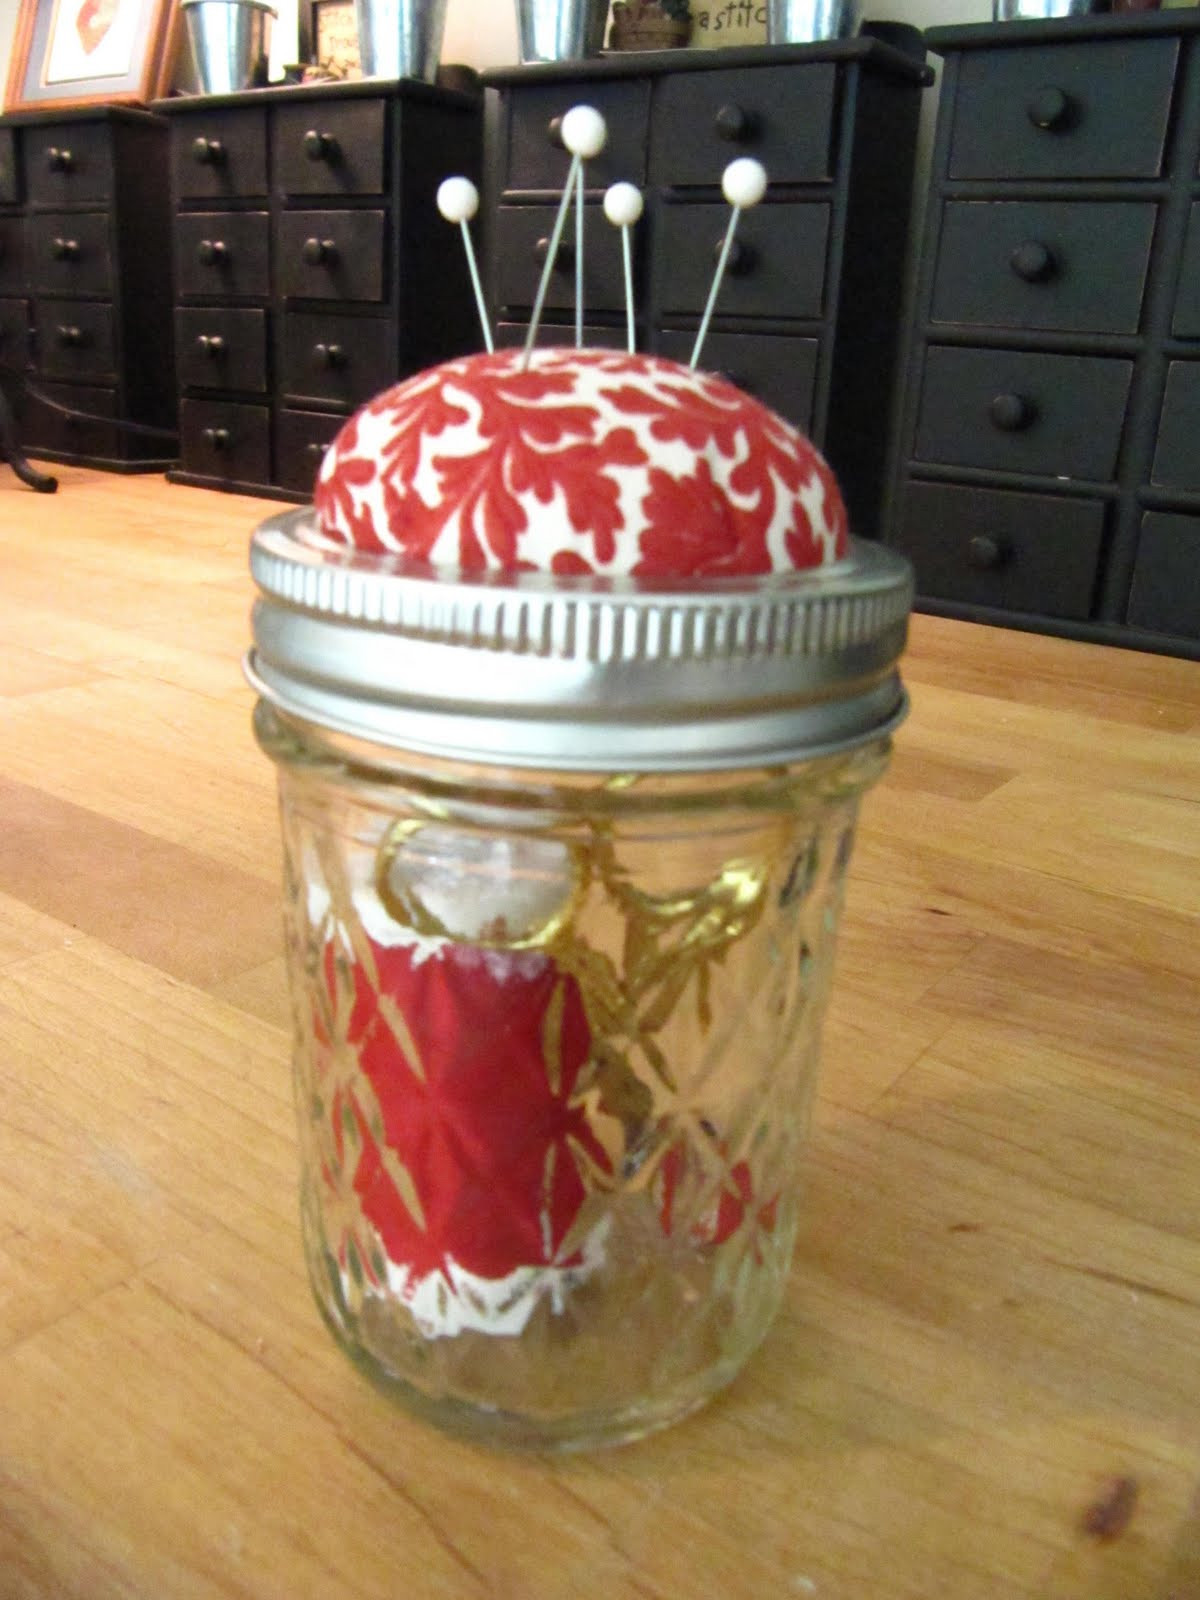 Best ideas about DIY Mason Jar
. Save or Pin 10 Brilliant Mason Jar DIY Ideas For Your Tiny Apartment Now.